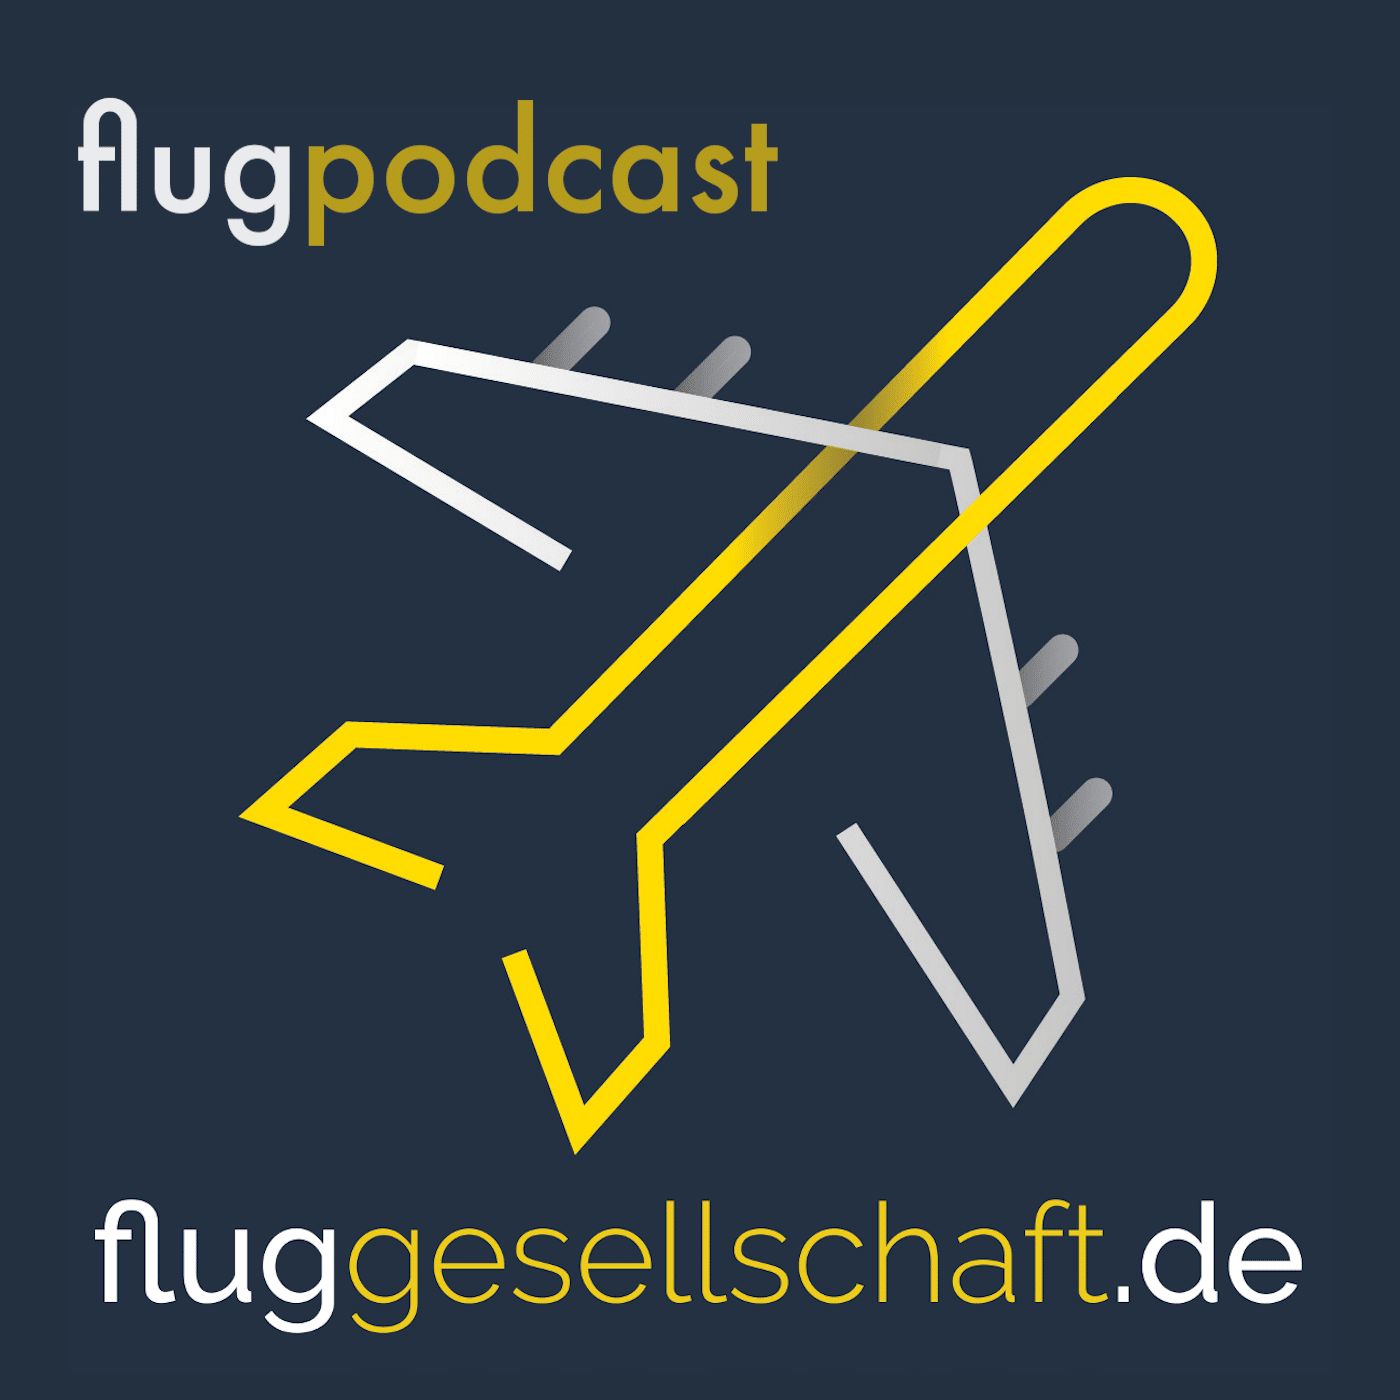 Fluggsellschaft.de der Flugpodcast im Tourismus